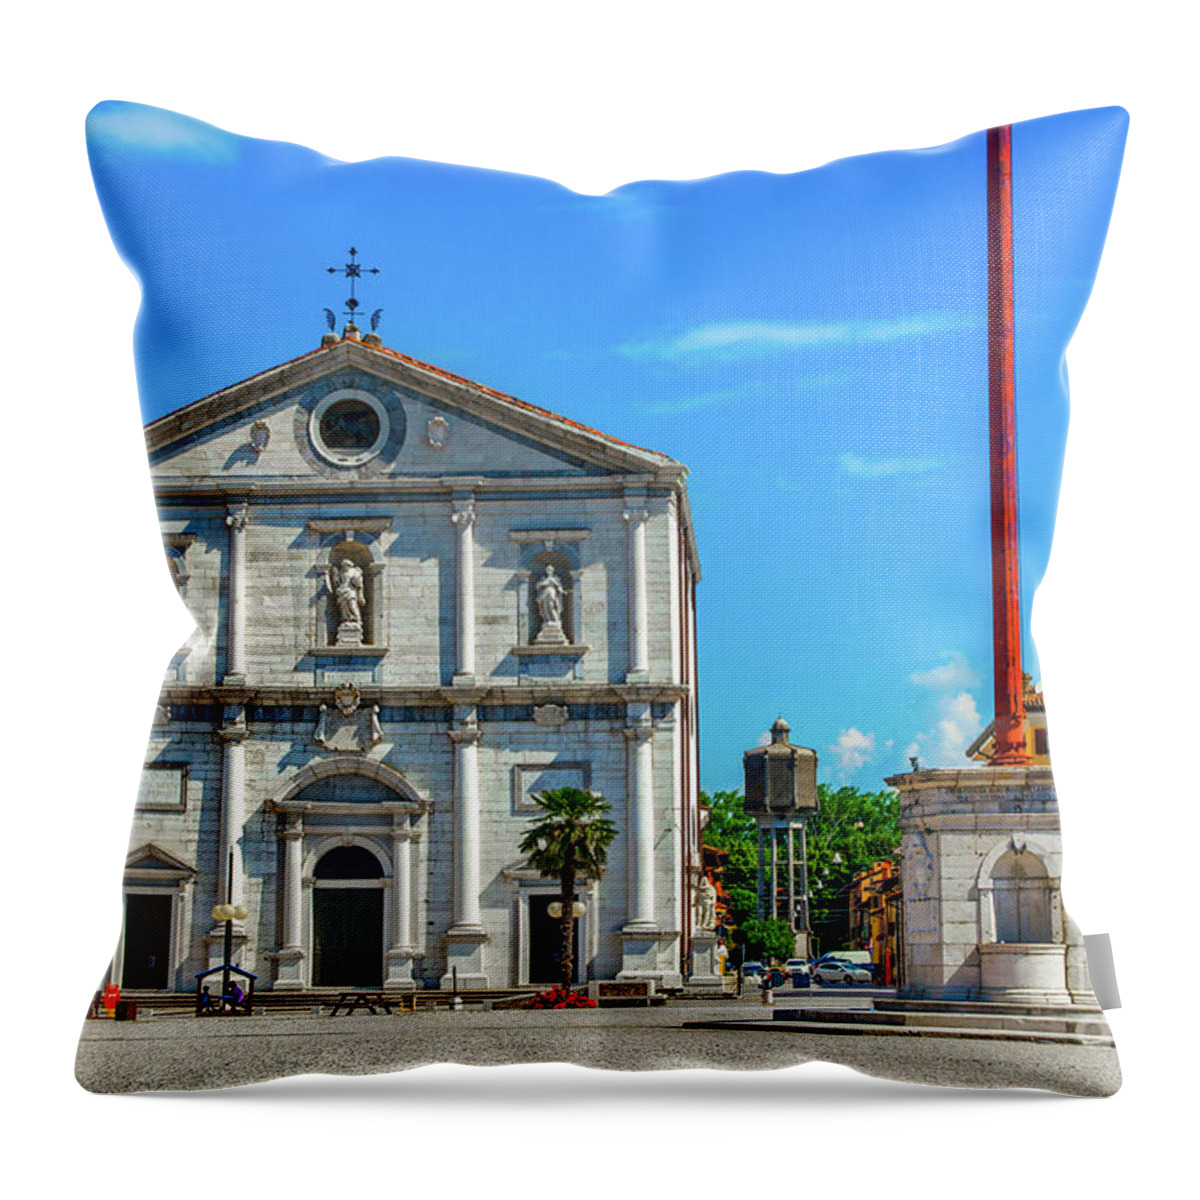 Palmanova Throw Pillow featuring the photograph Palmanova cathedral - Udine province - Friuli Venezia Giulia region - Italy by Luca Lorenzelli